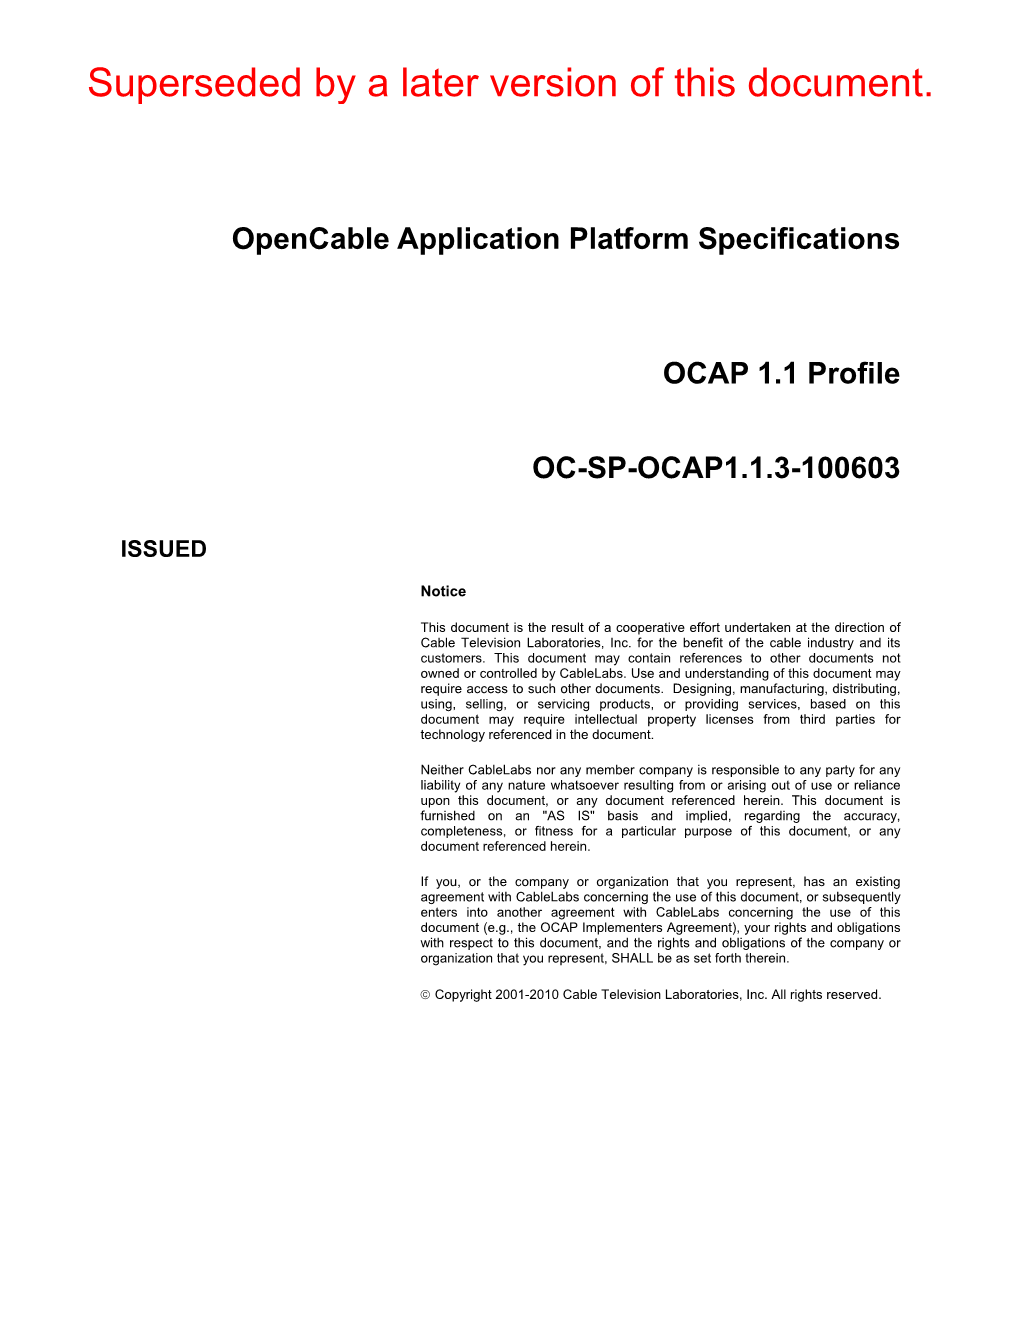 Opencable Application Platform Specifications OCAP 1.1 Profile OC-SP-OCAP1.1.3-100603